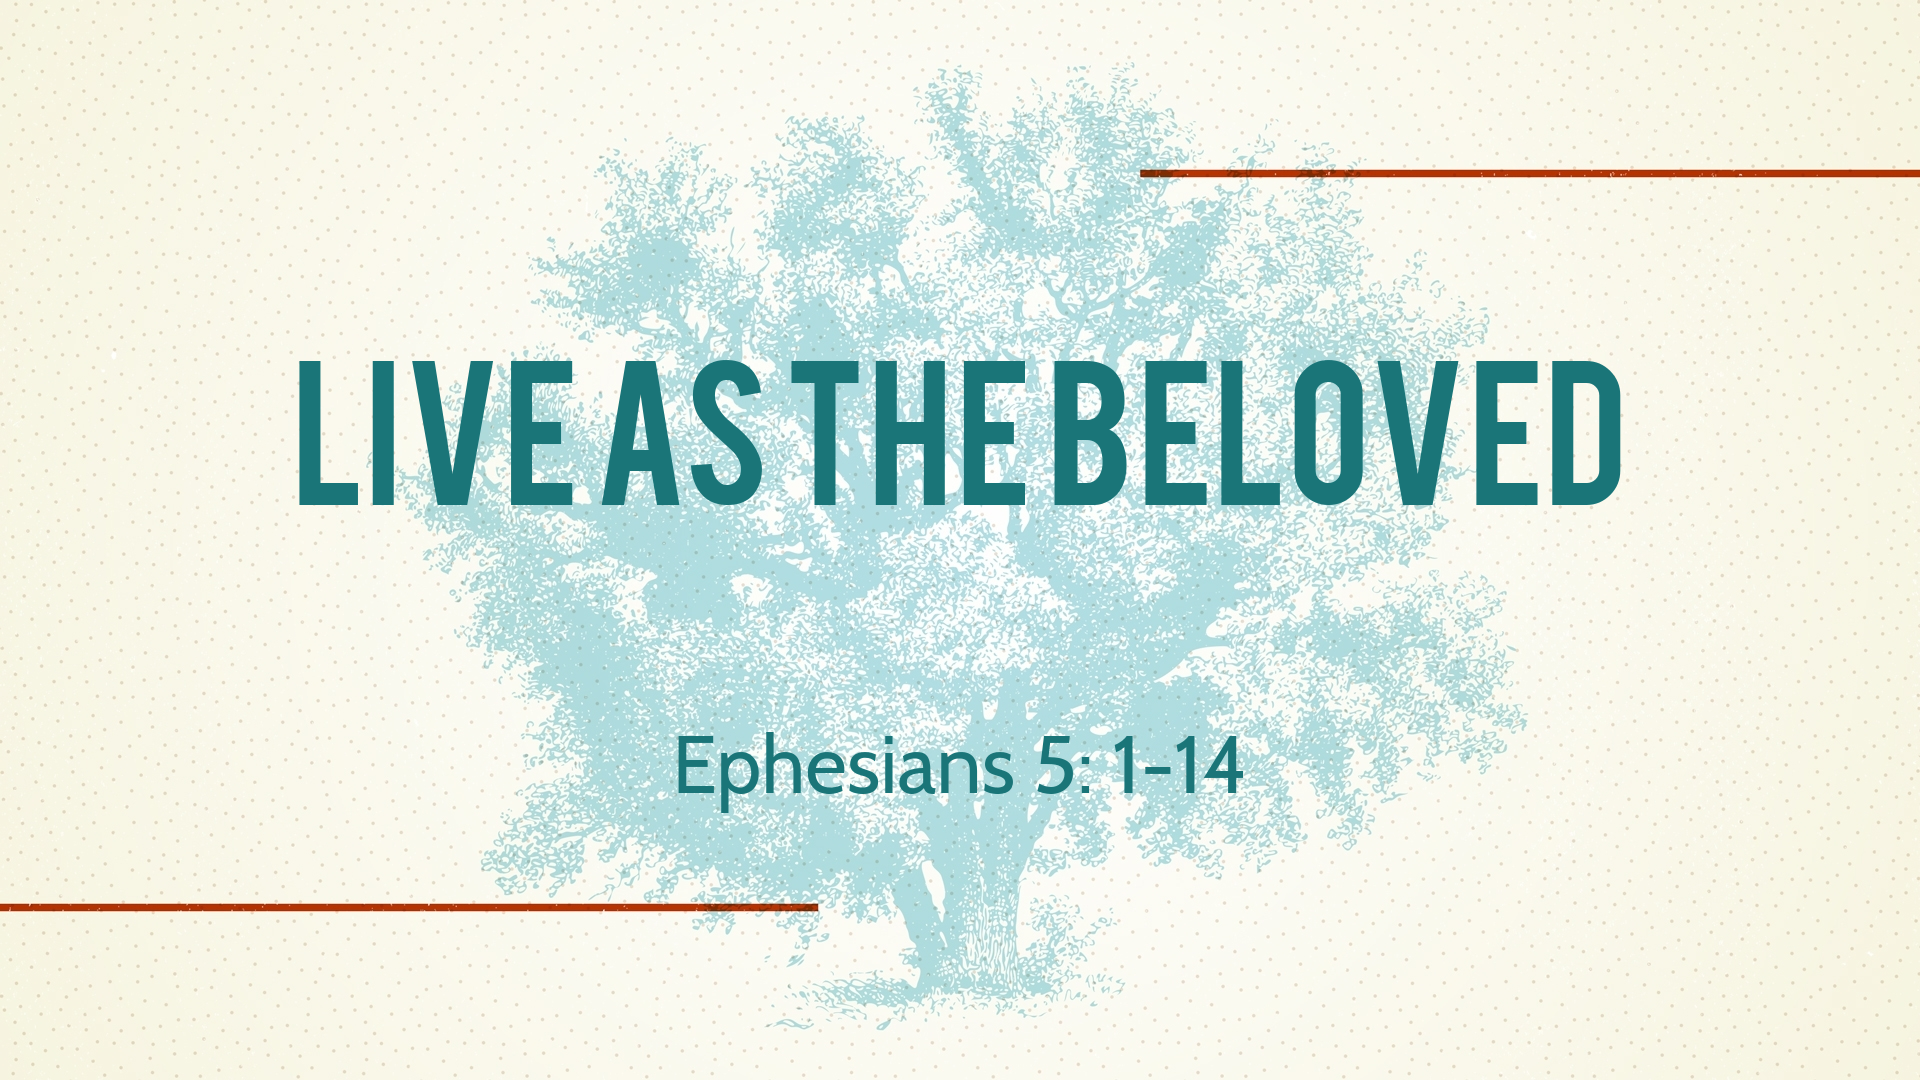 Jun 27, 2021 - Live as the Beloved (Video) Ephesians 5: 1-14